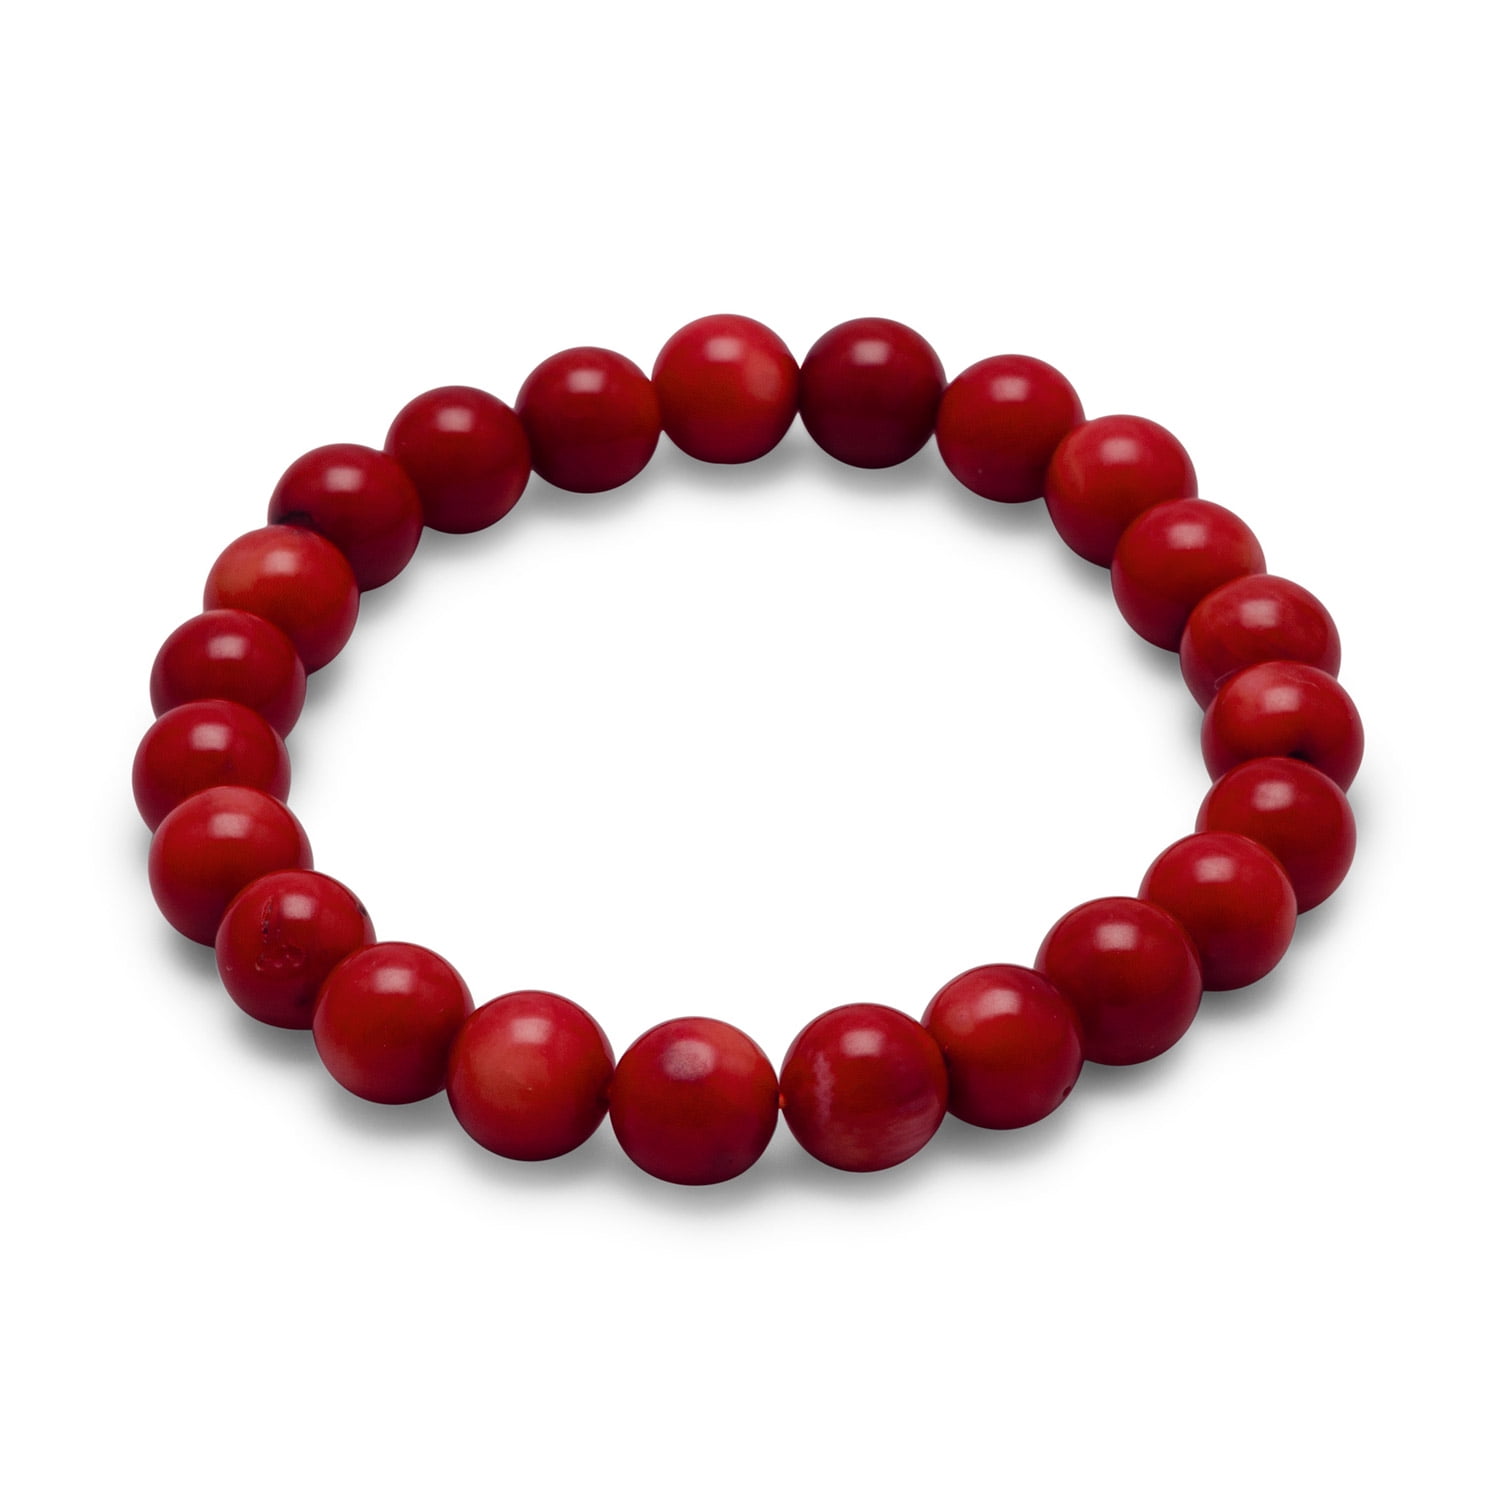 Round Coral-Pink Jade Stone Beads Beaded Fashion Jewelry Bracelet 7.5" Gift Box 